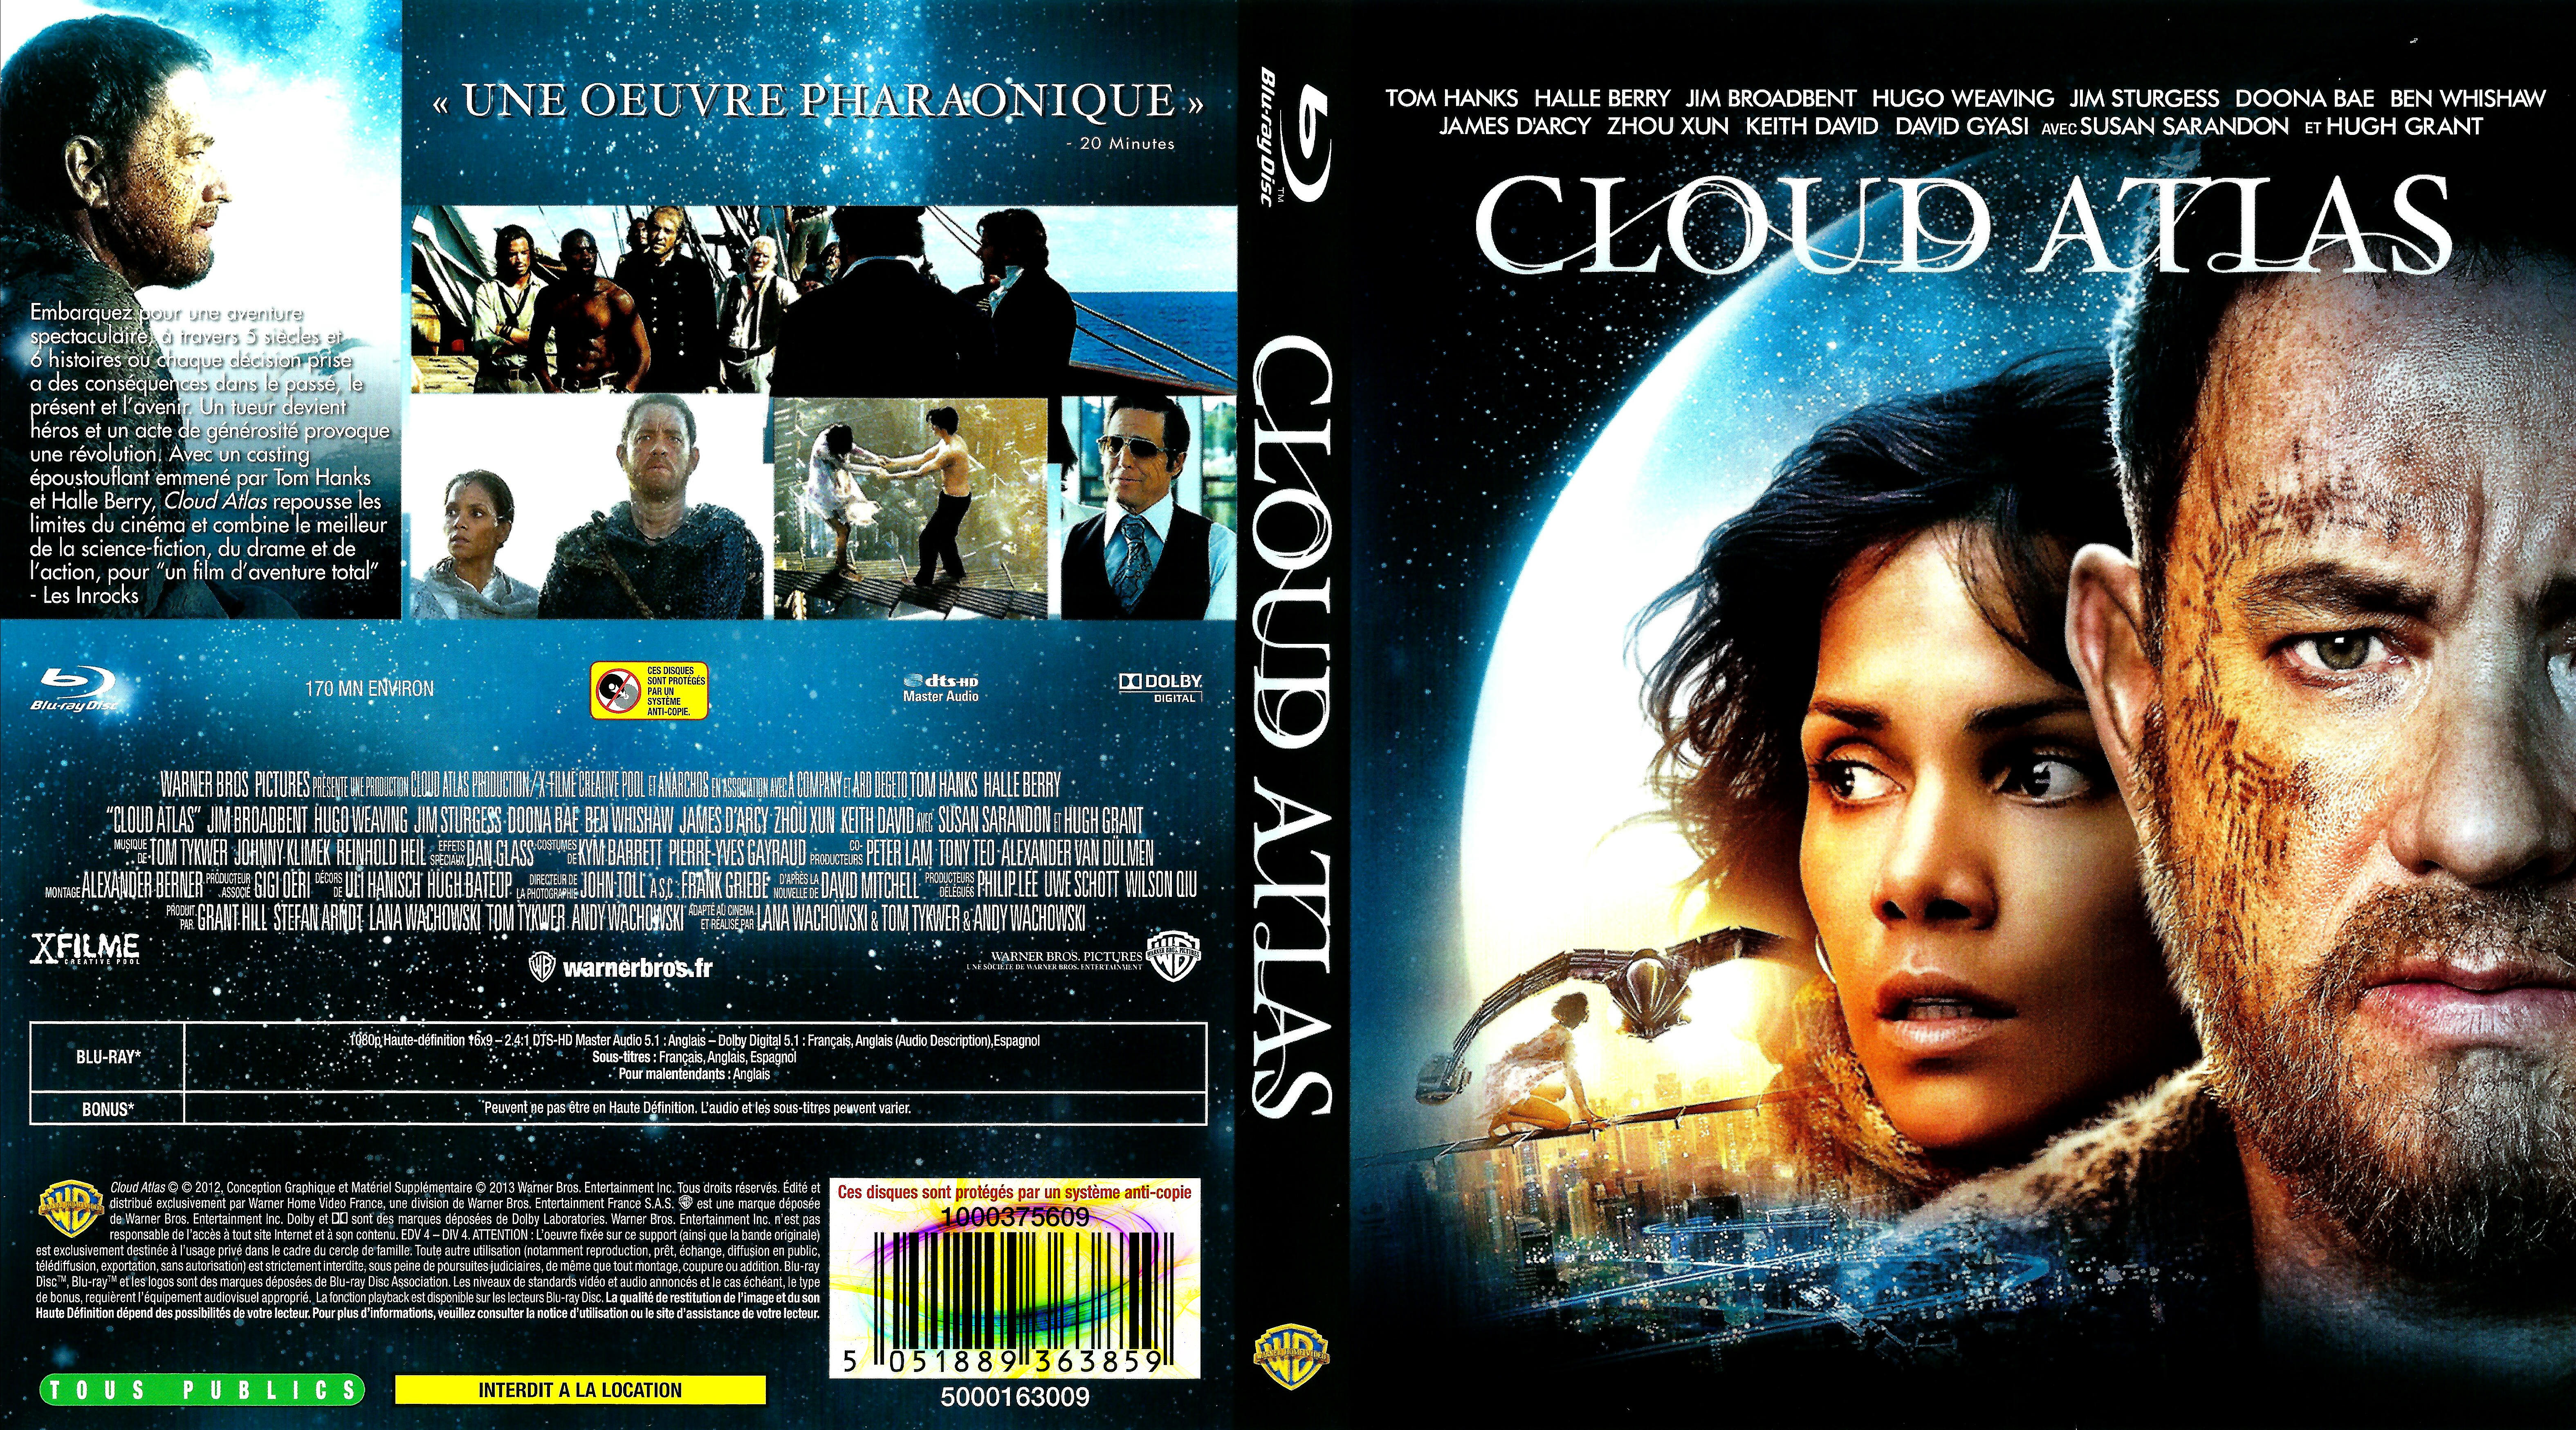 Jaquette DVD Cloud atlas (BLU-RAY)